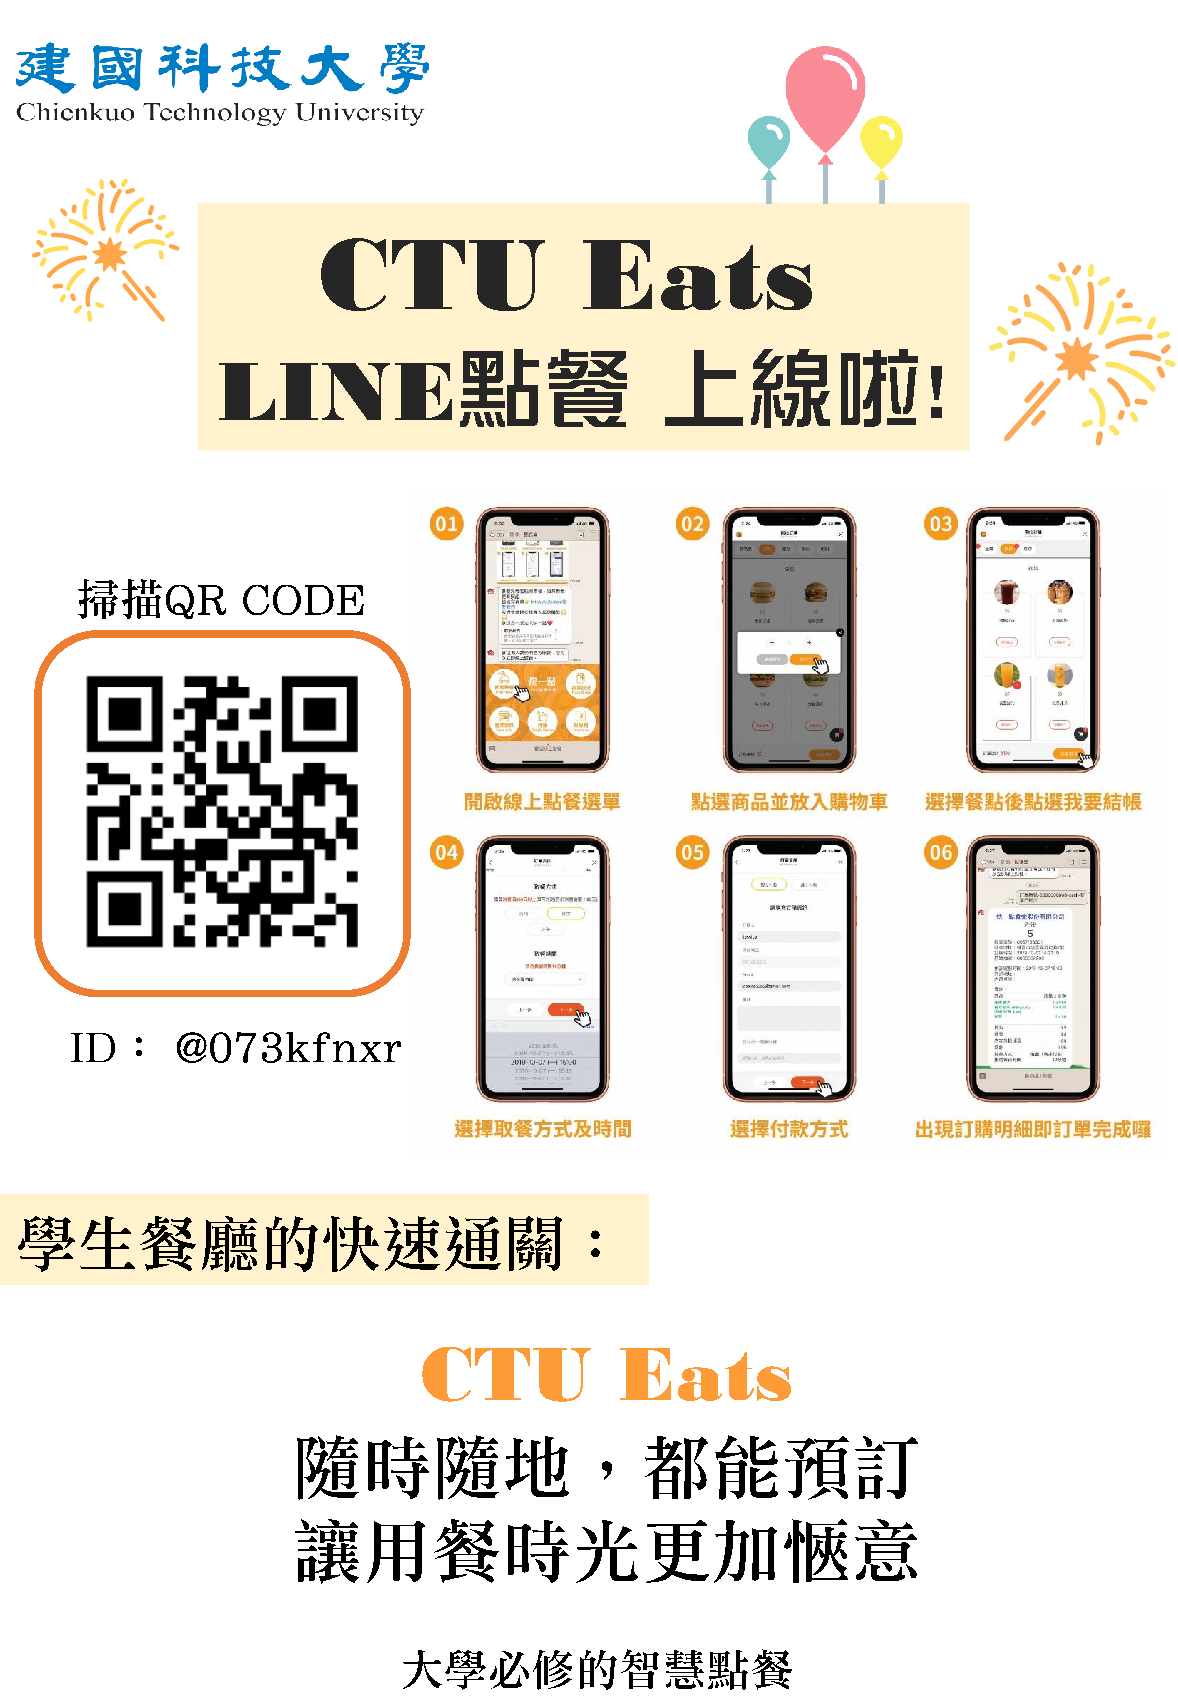  CTU Eats LINE點餐海報圖